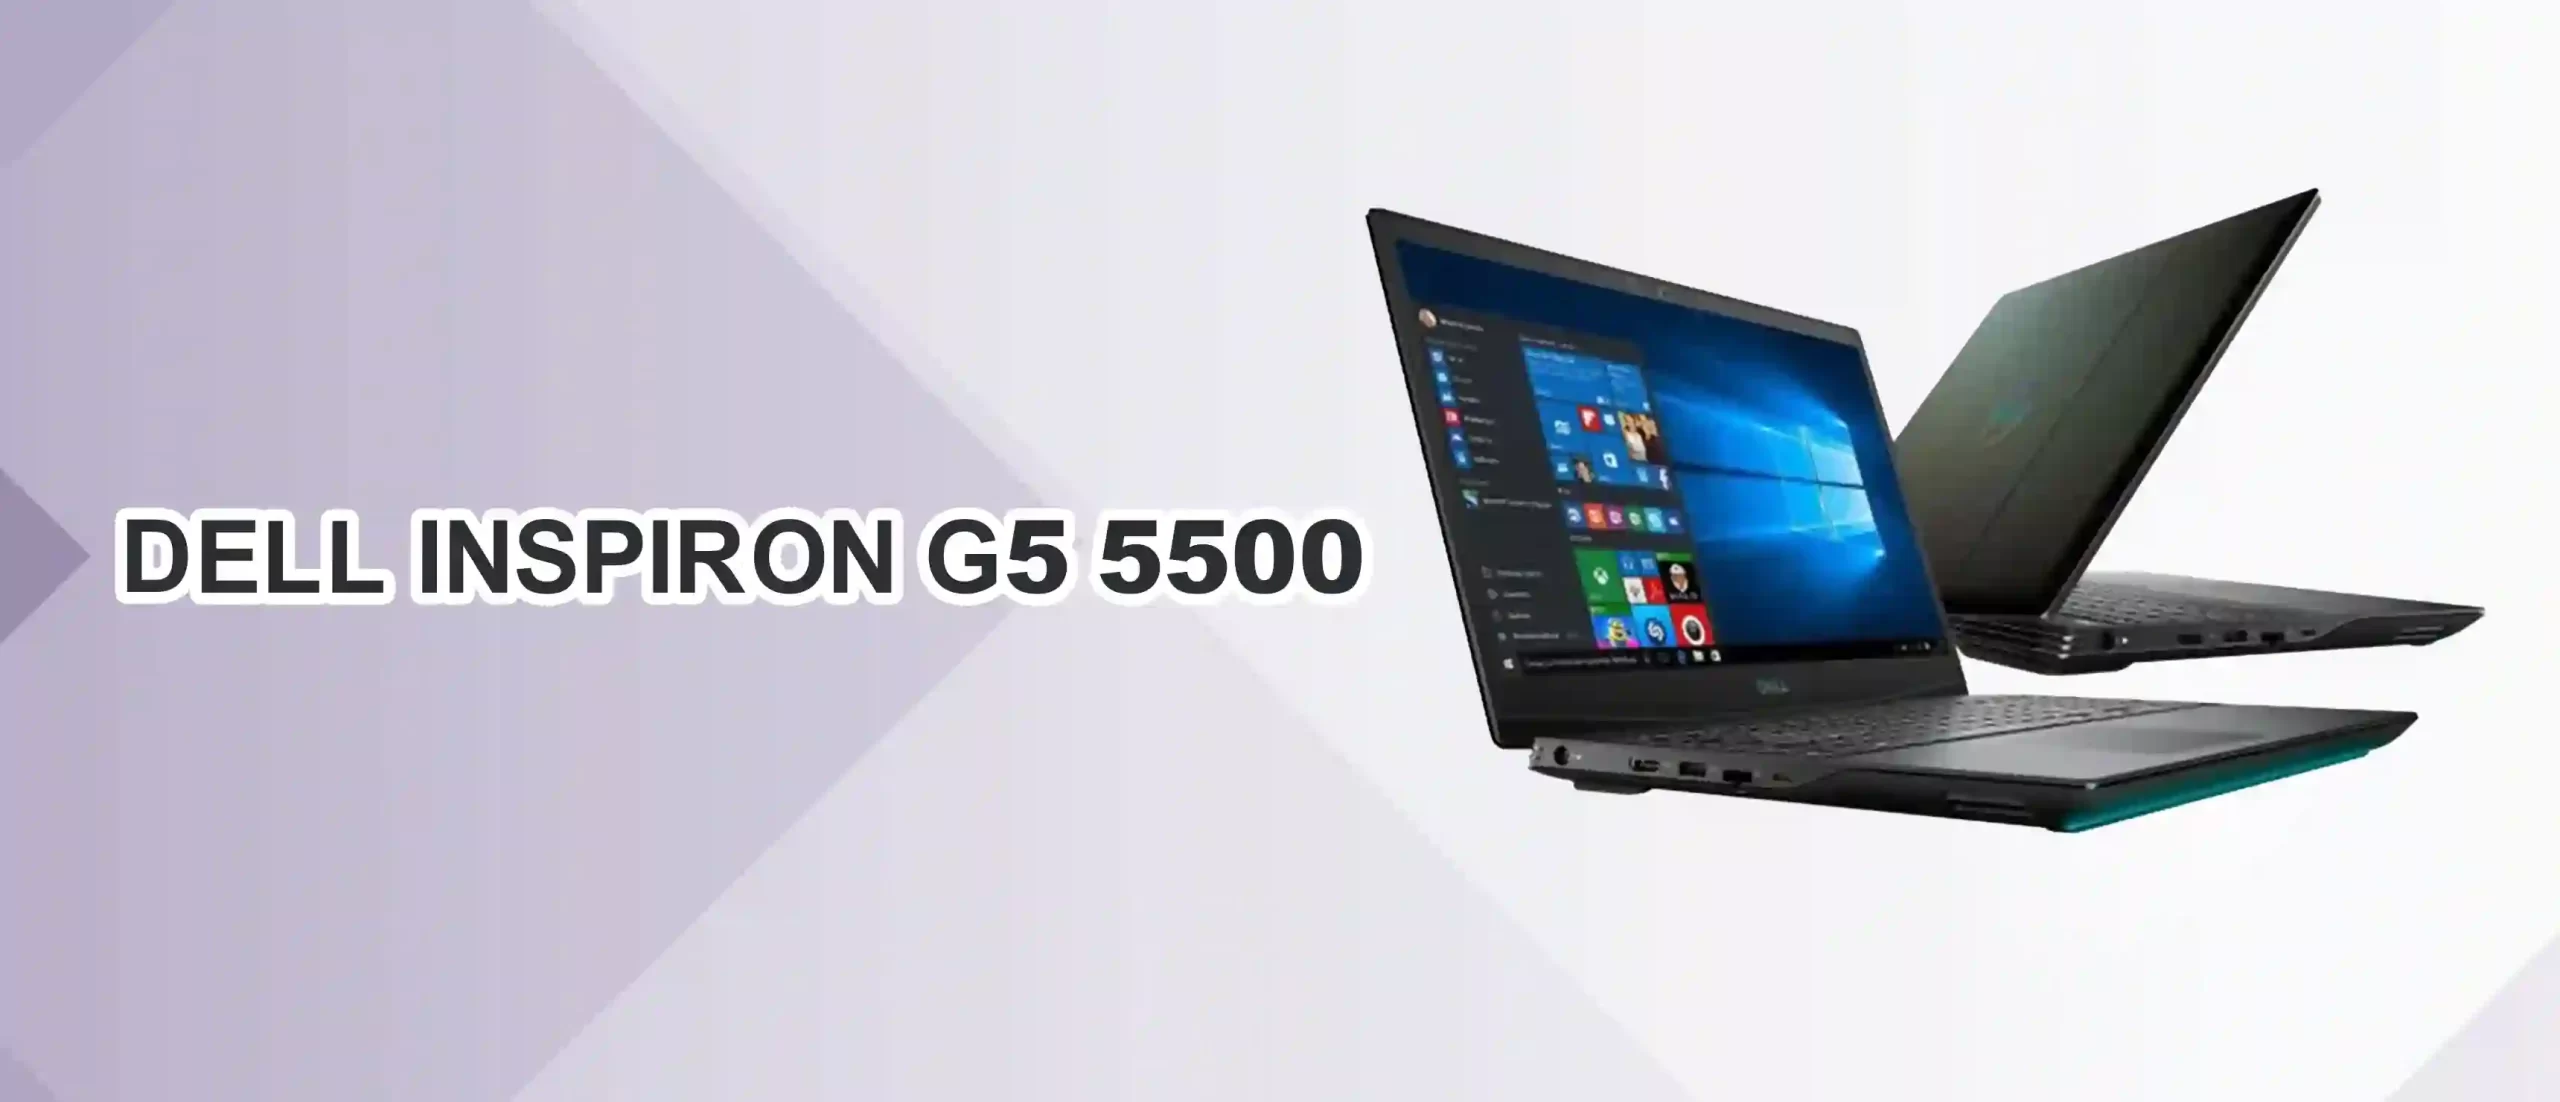 Dell Inspiron G5 5500